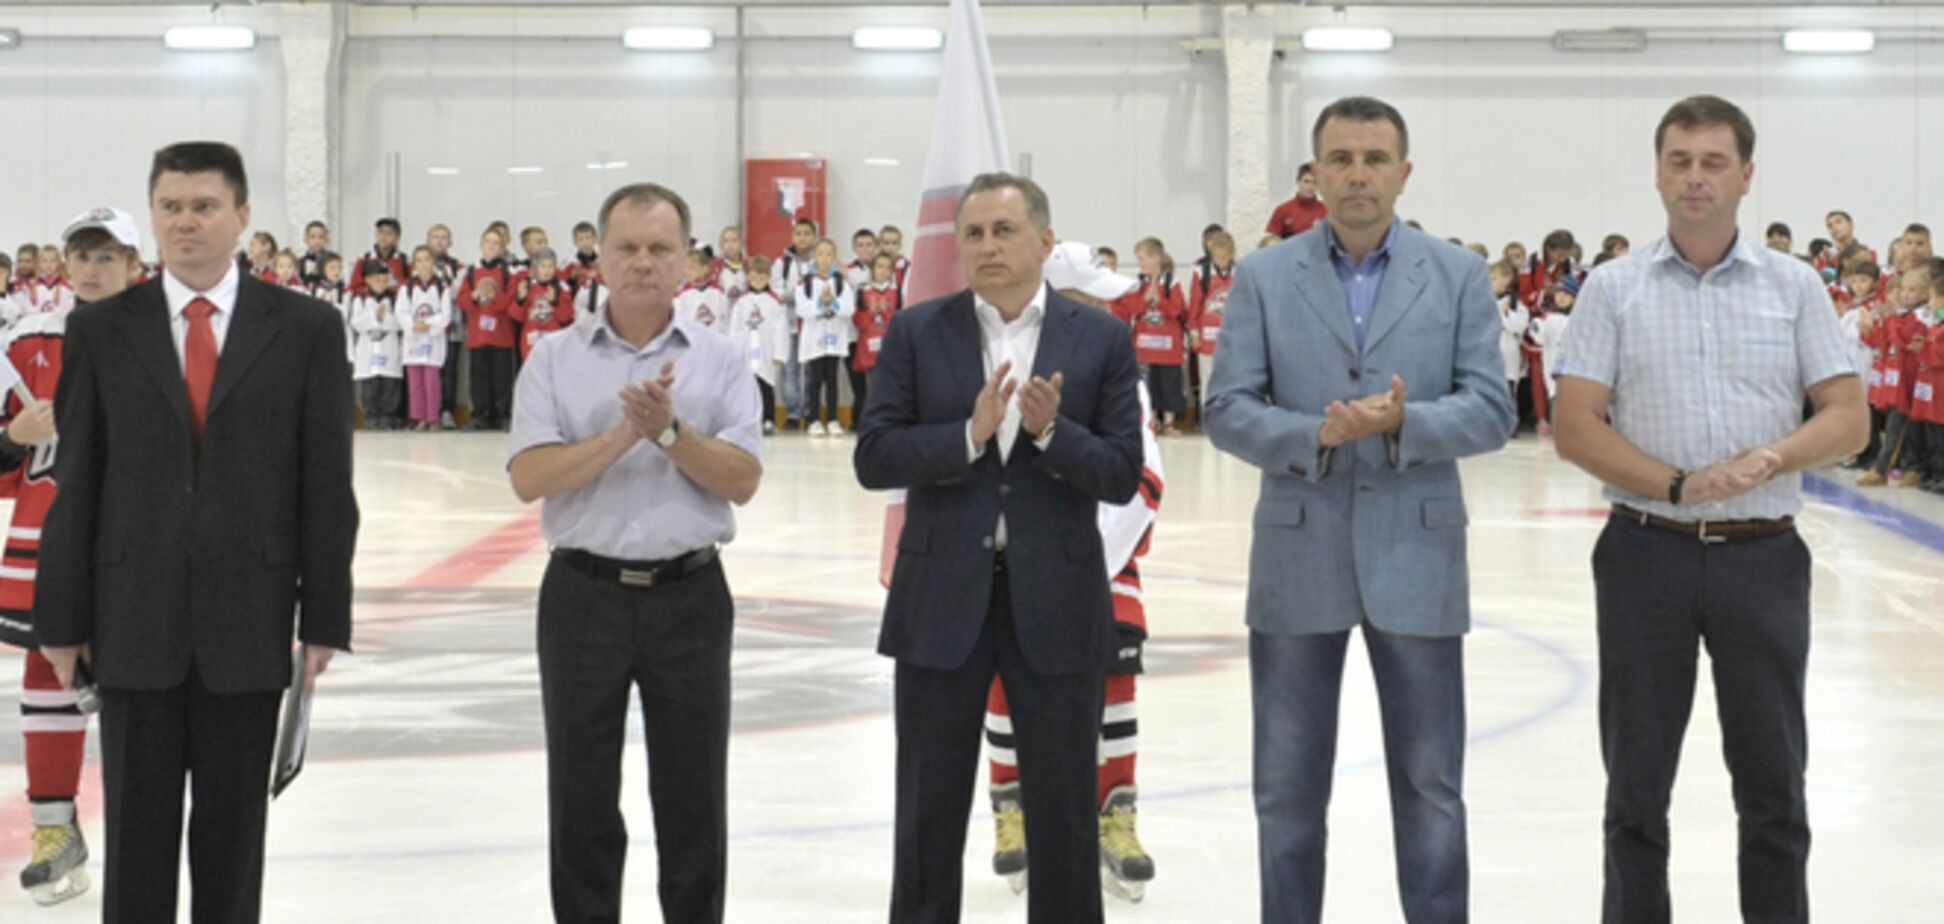 ДЮСШ хоккейного клуба 'Донбасс' открыла двери для детей из Славянска, Краматорска и Константиновки